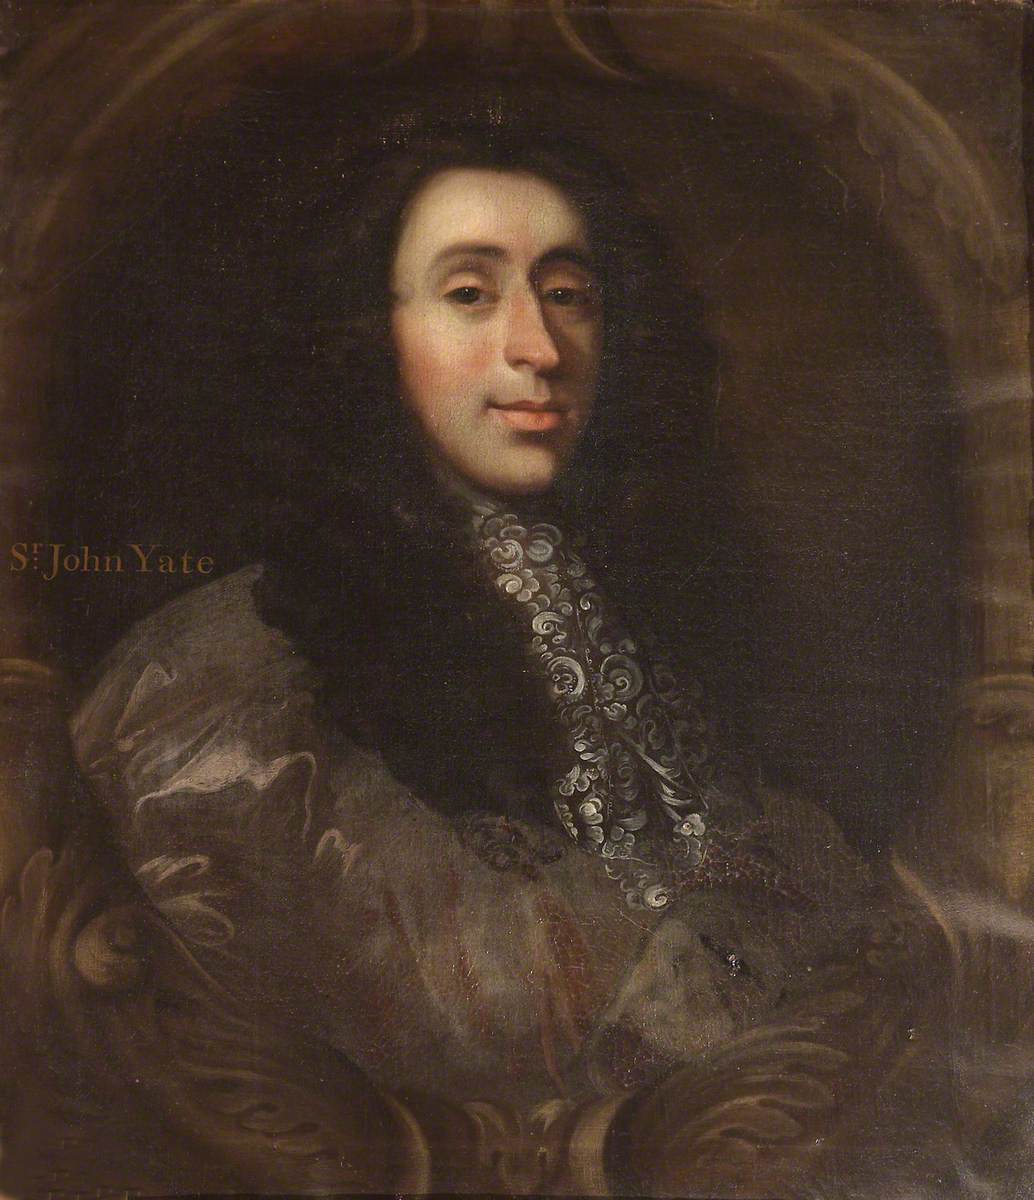 Sir John Yate (c.1660–1690), 4th & Last Bt